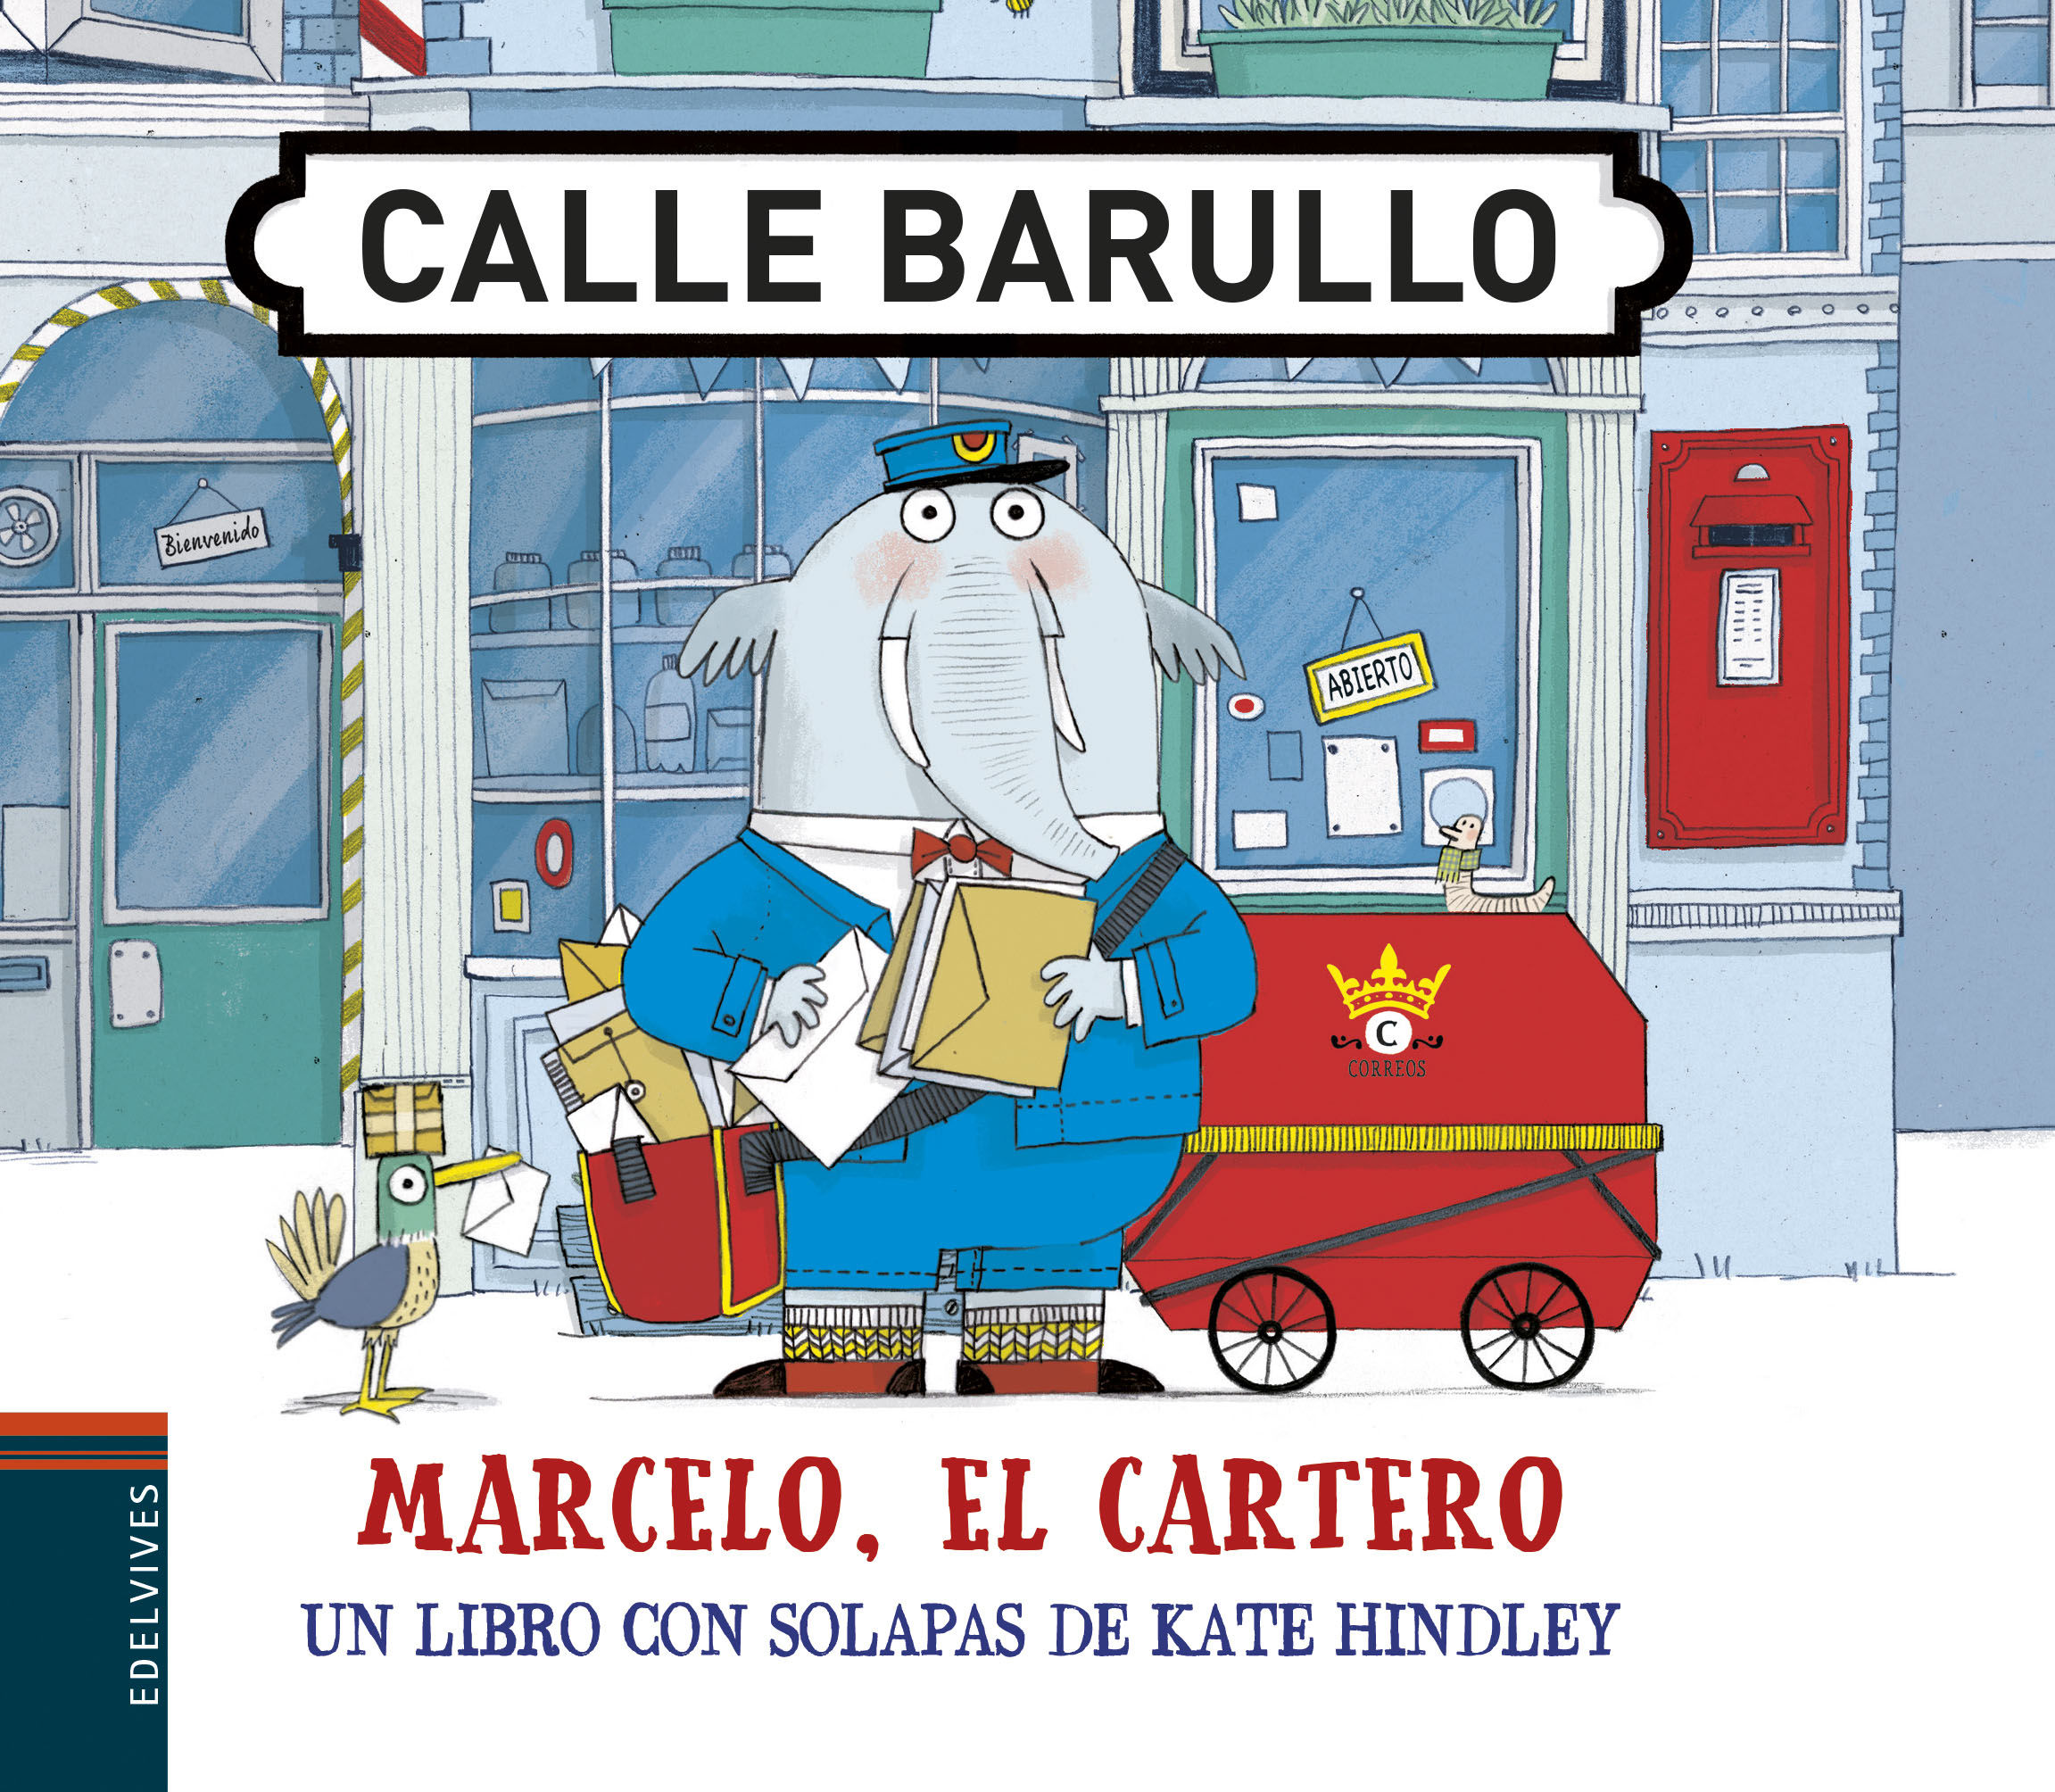 MARCELO, EL CARTERO. UN LIBRO CON SOLAPAS DE KATE HINDLEY